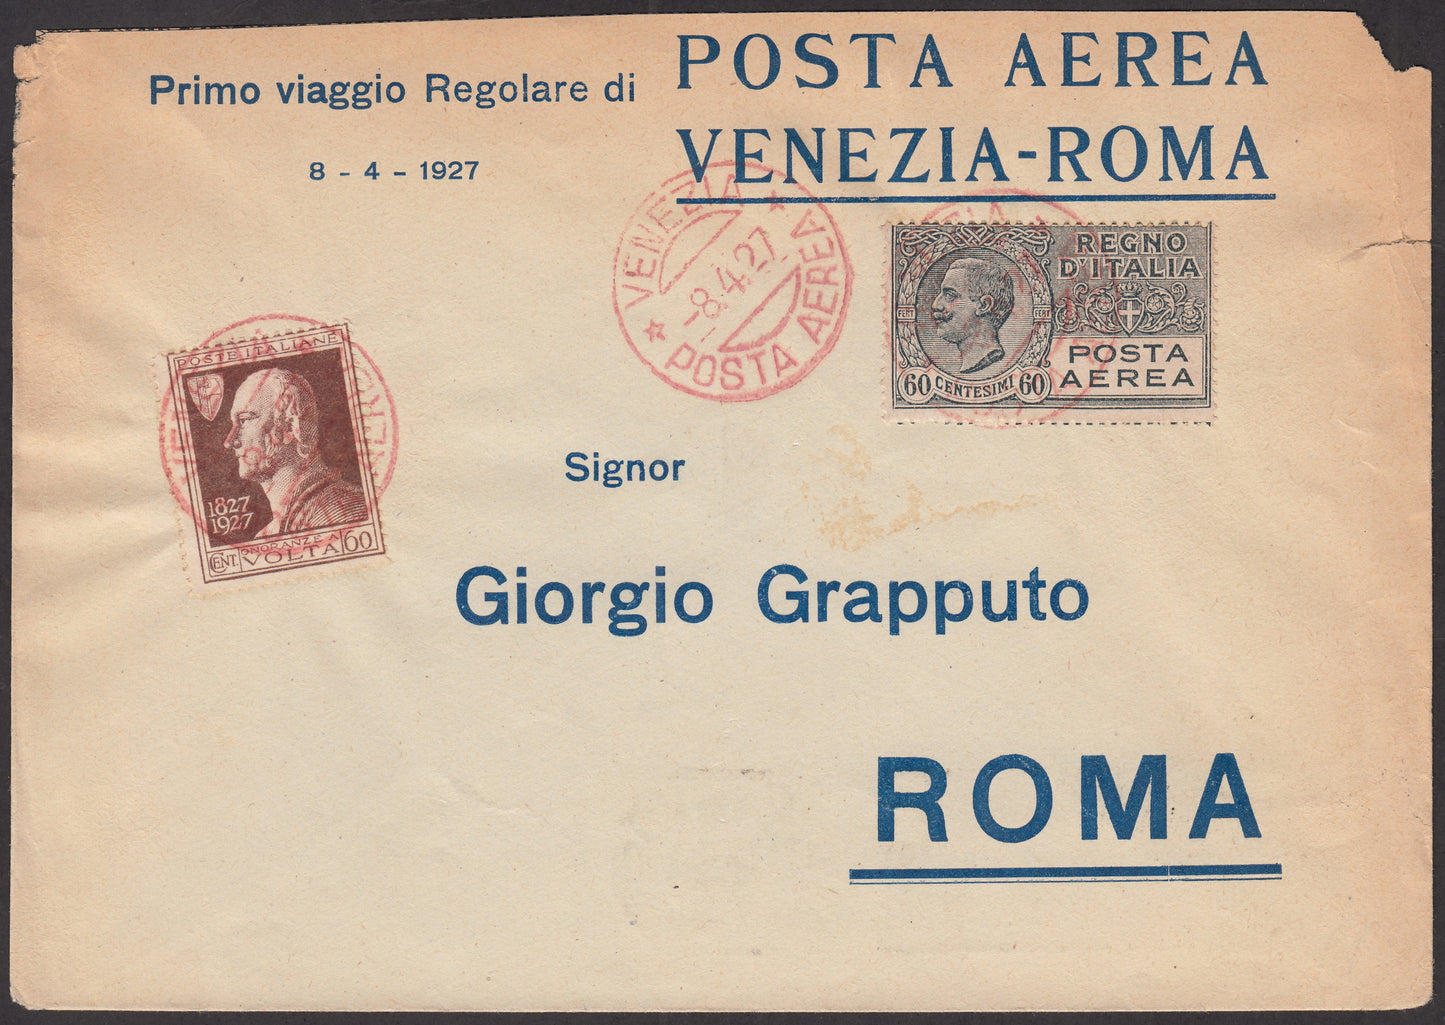 1927 - Primo viaggio regolare di Posta Aerea Venezia - Roma 8/4/1927 cn Volta c. 60 bruno + P.Aerea c. 60 grigio (212 + A3)